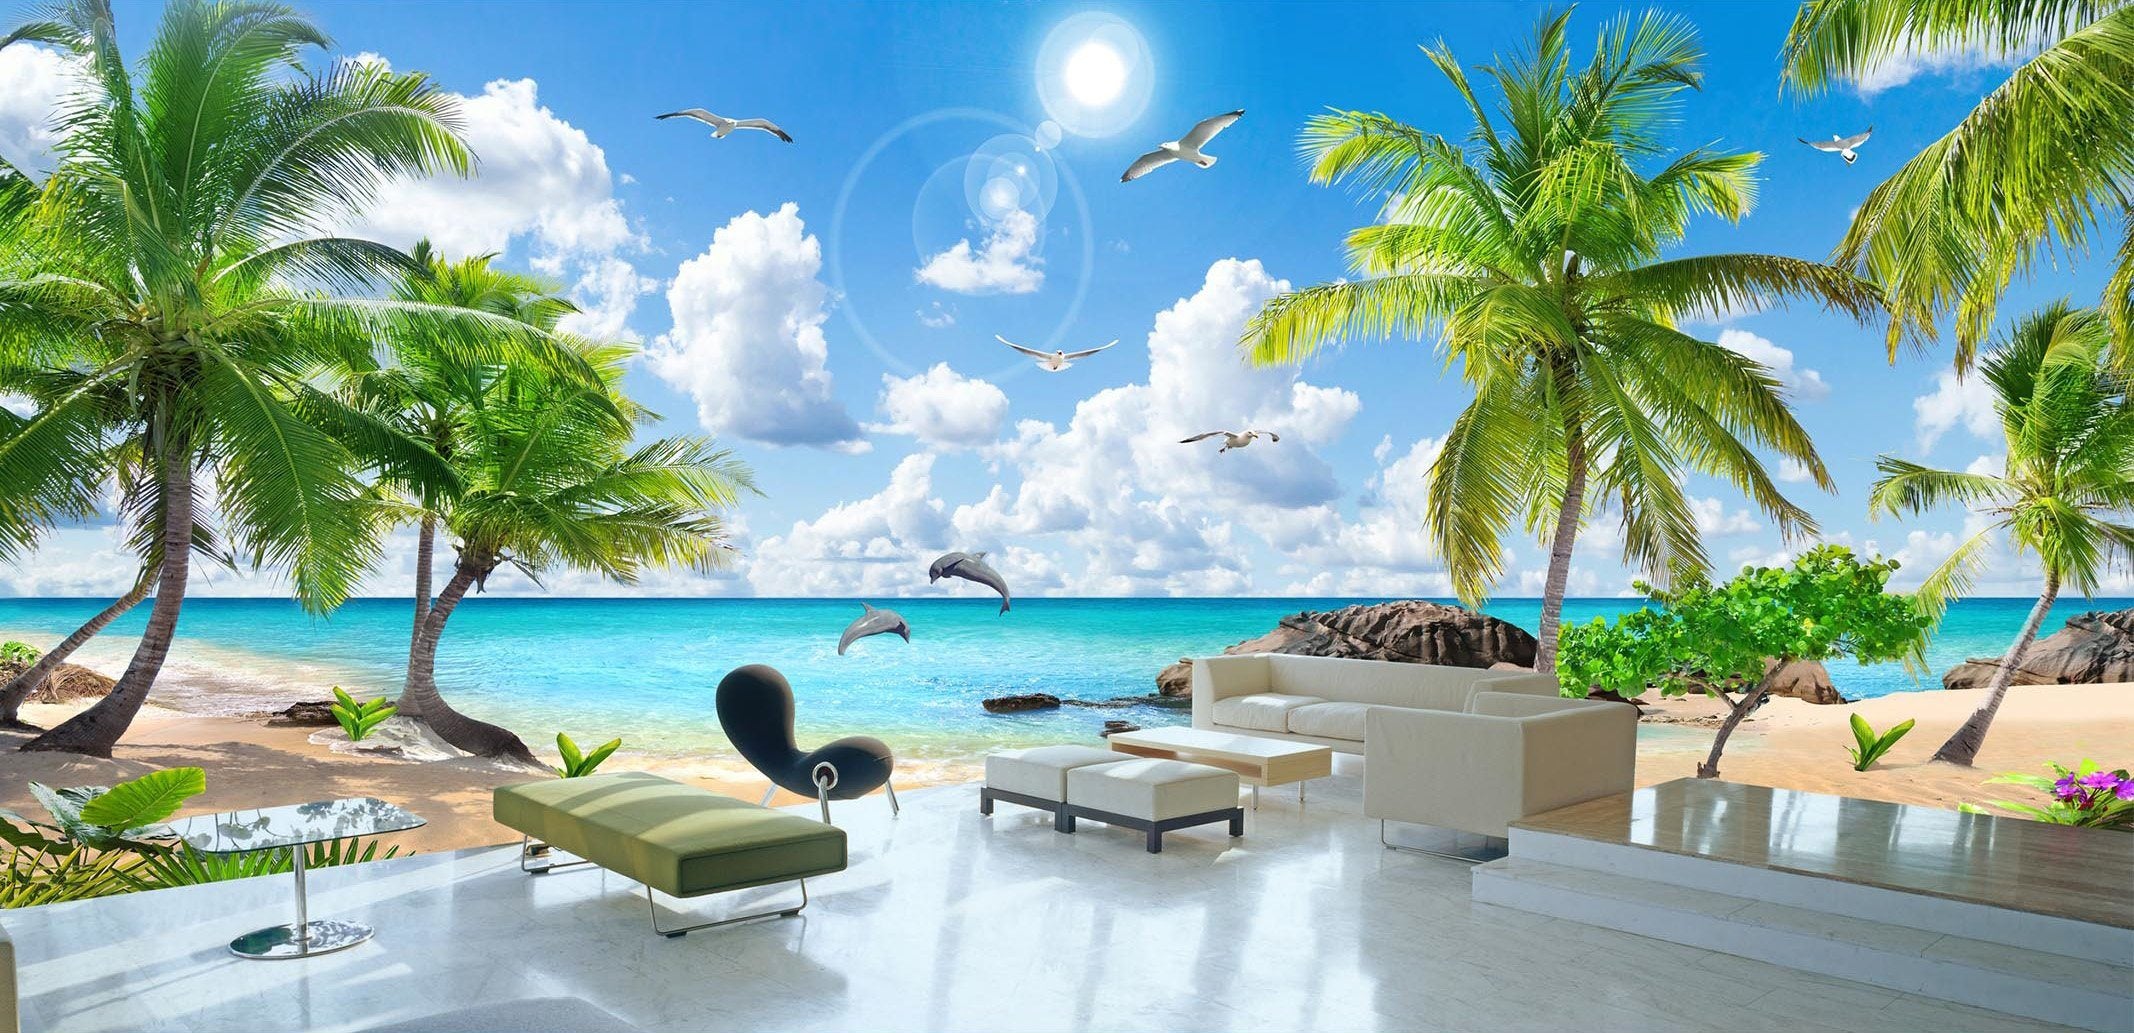 3D Sunny Dolphin Beach 296 Wallpaper AJ Wallpaper 